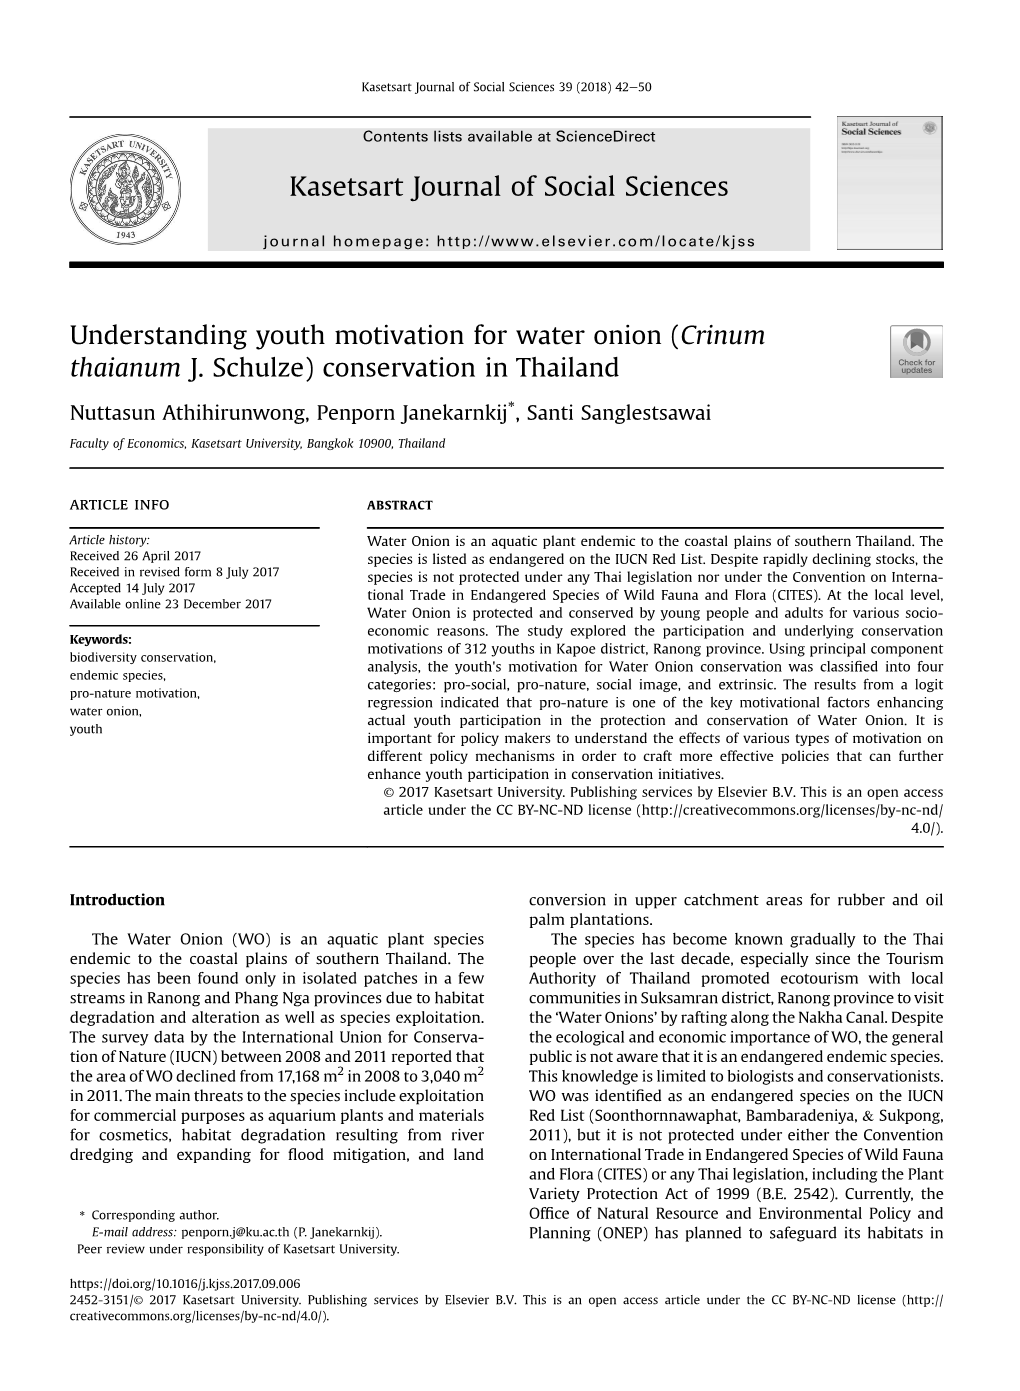 Crinum Thaianum J. Schulze) Conservation in Thailand